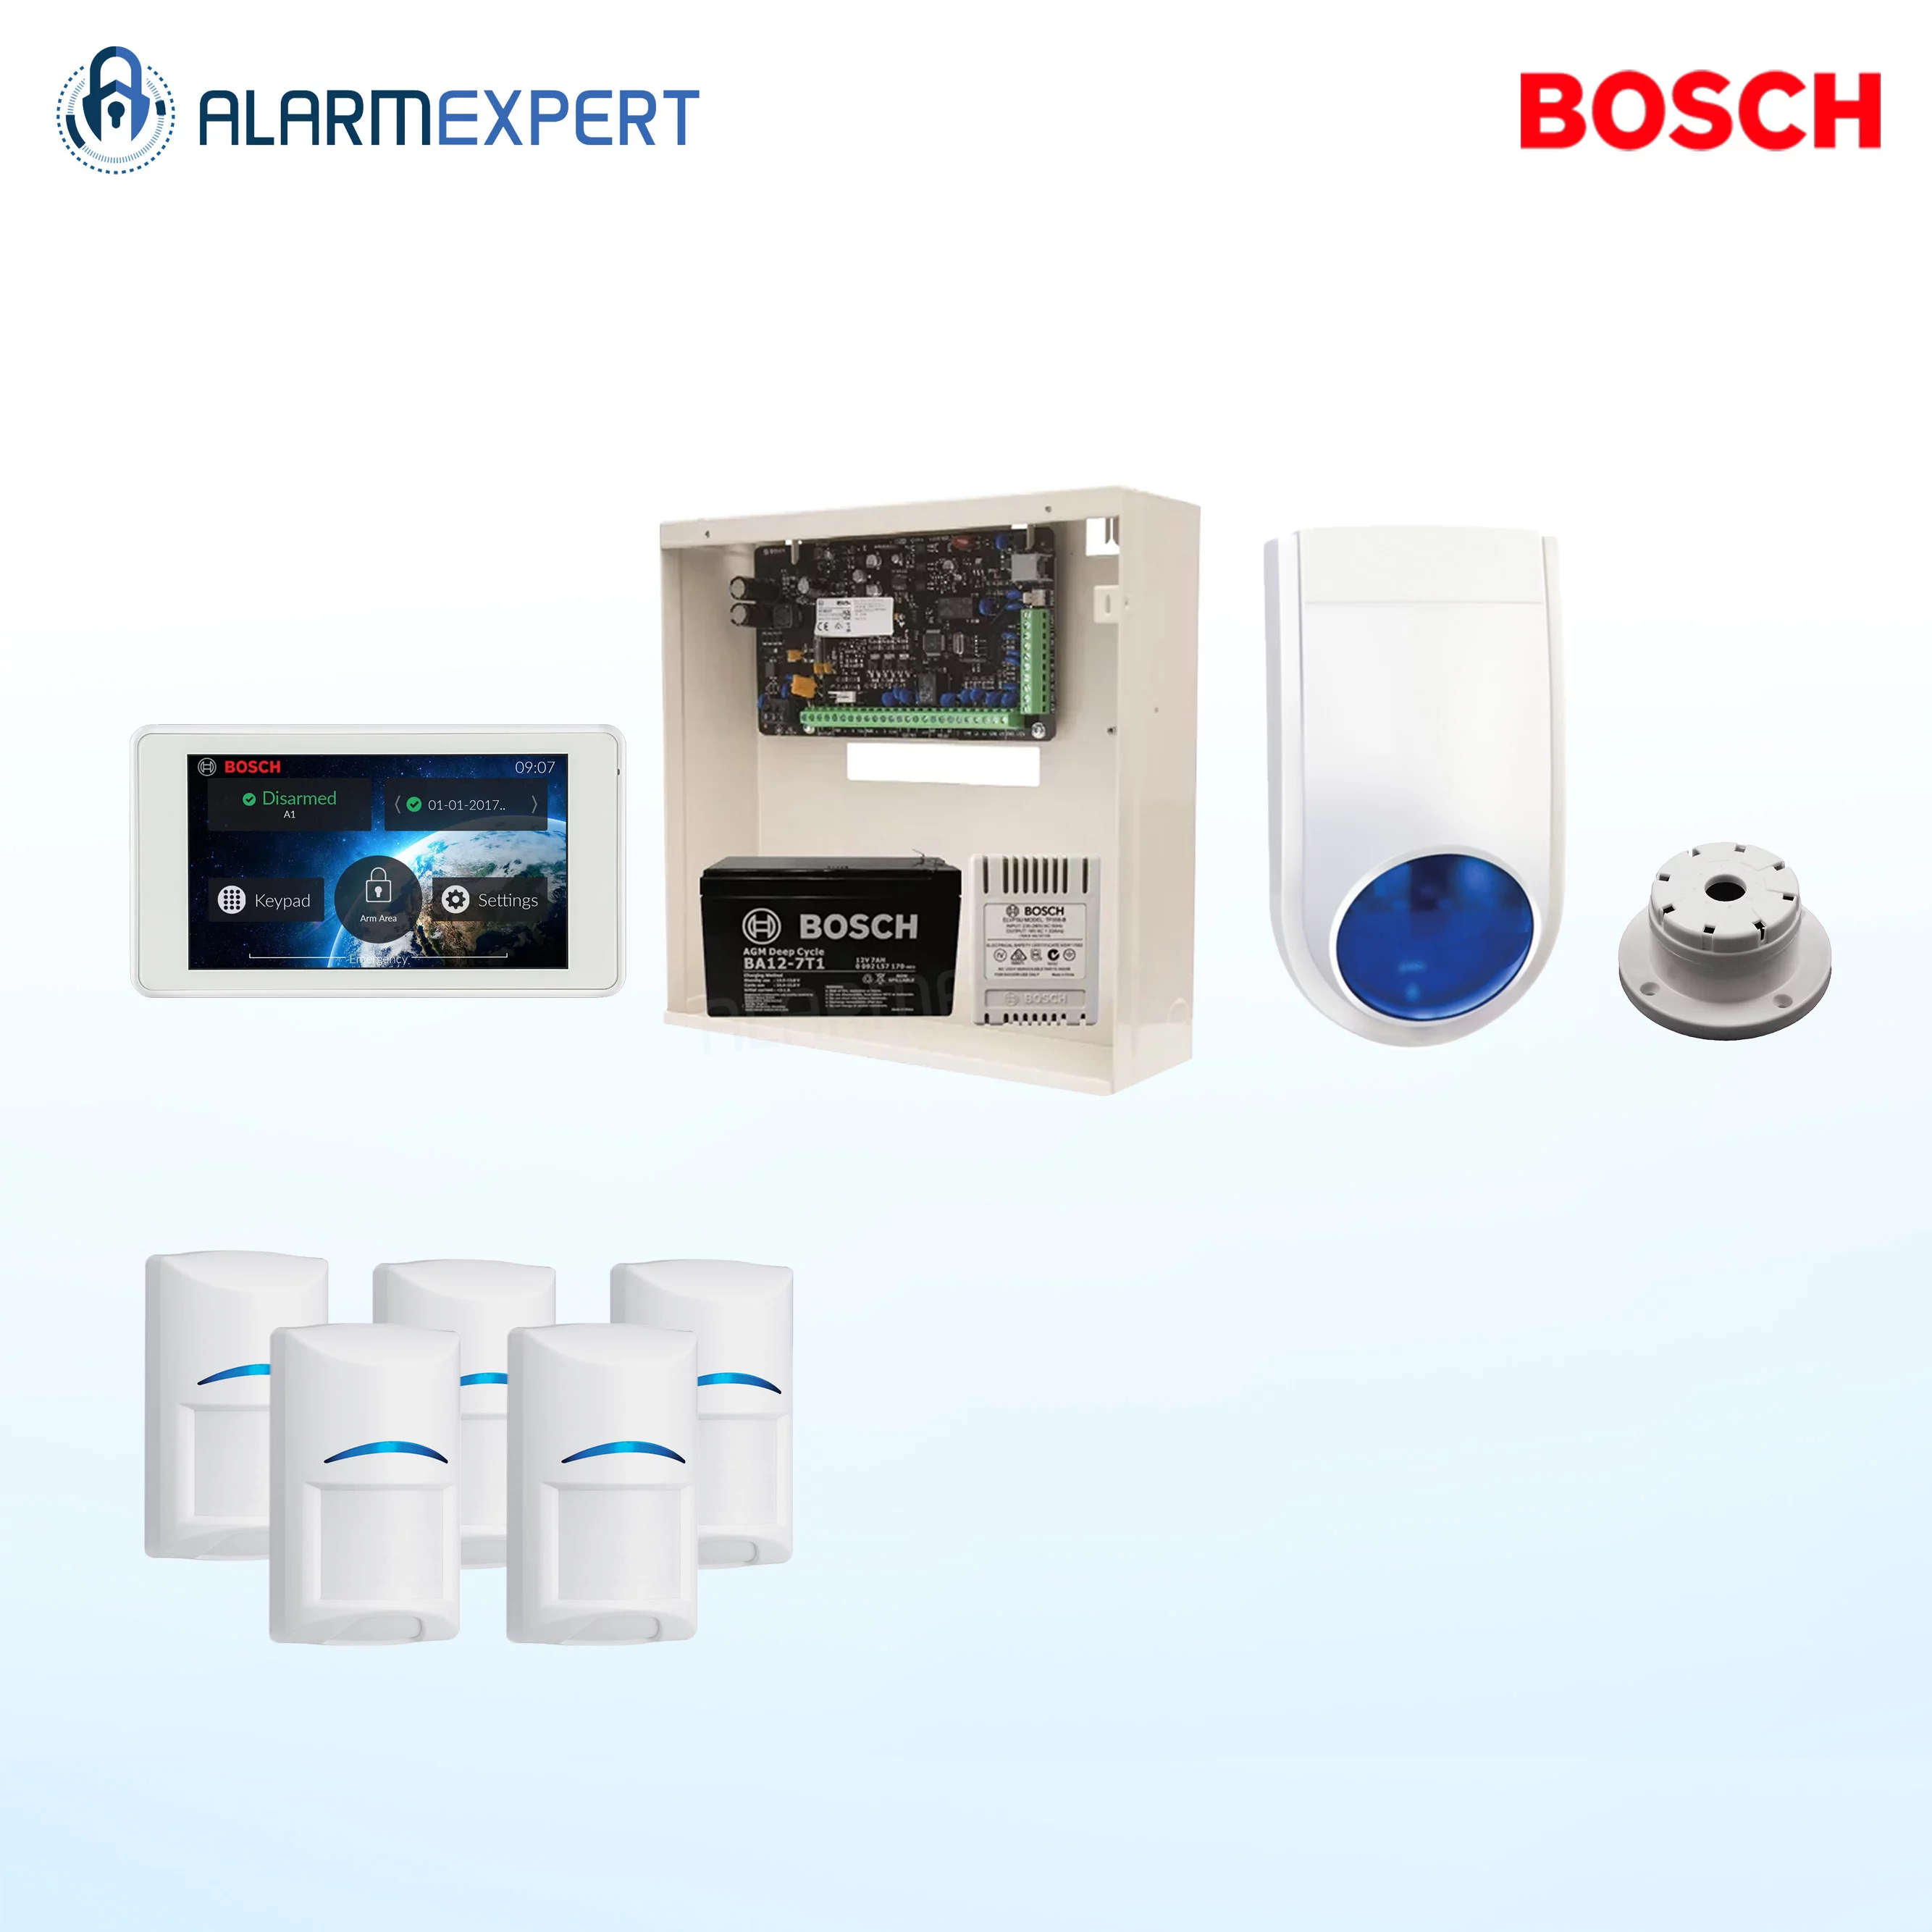 Bosch Solution 2000 + 5 PIRs + 5" Touch screen Keypad